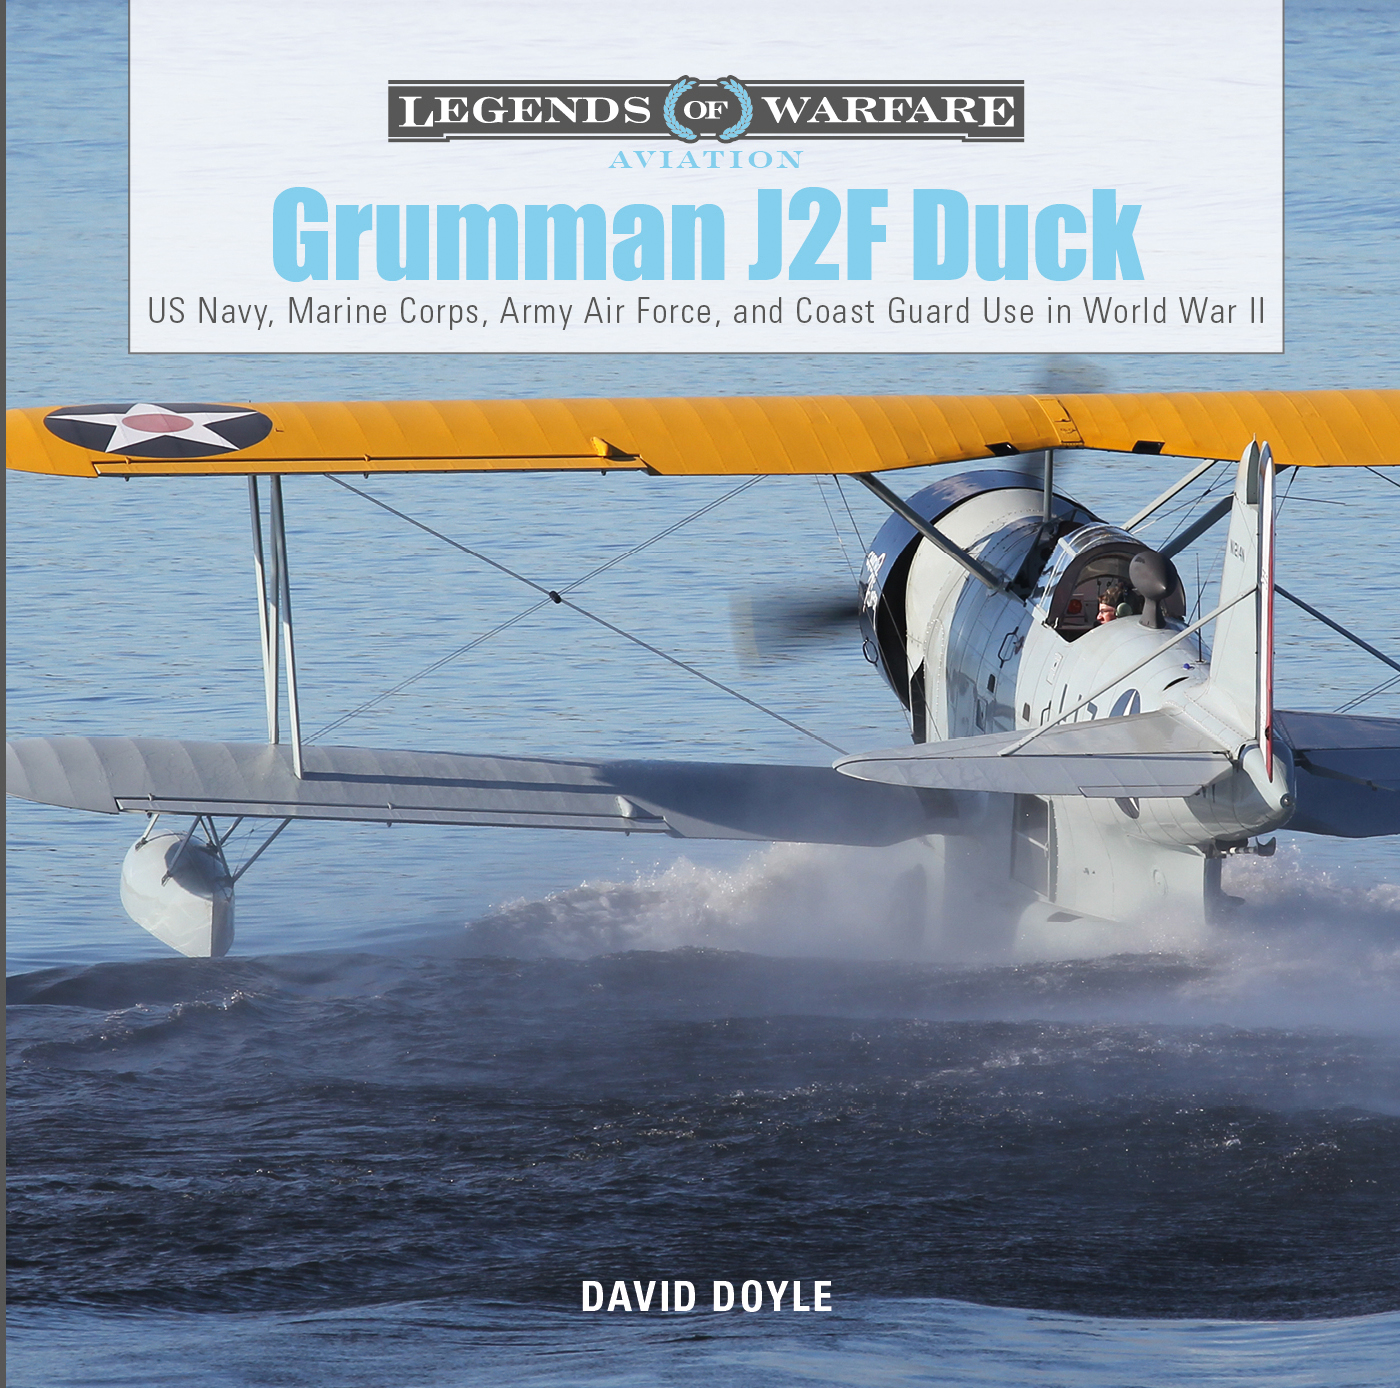 Grumman J2F Duck Wallpapers